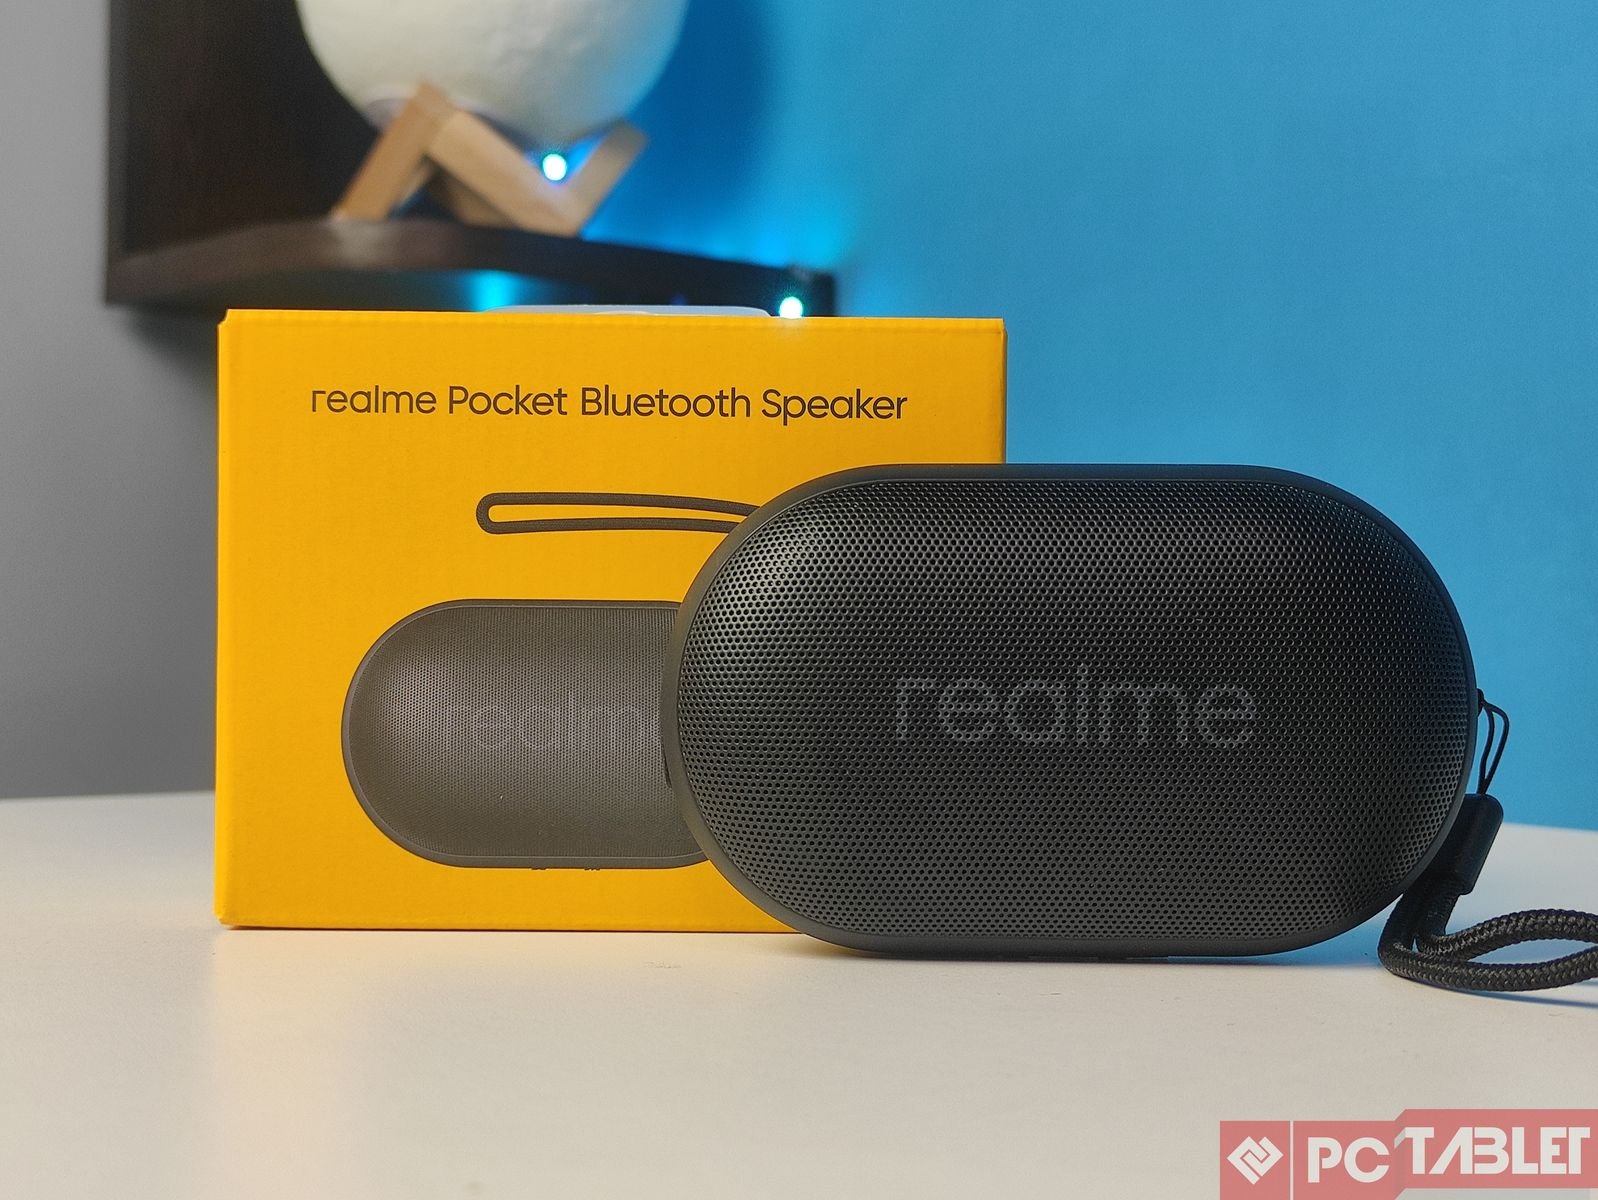 Realme pocket bluetooth speaker